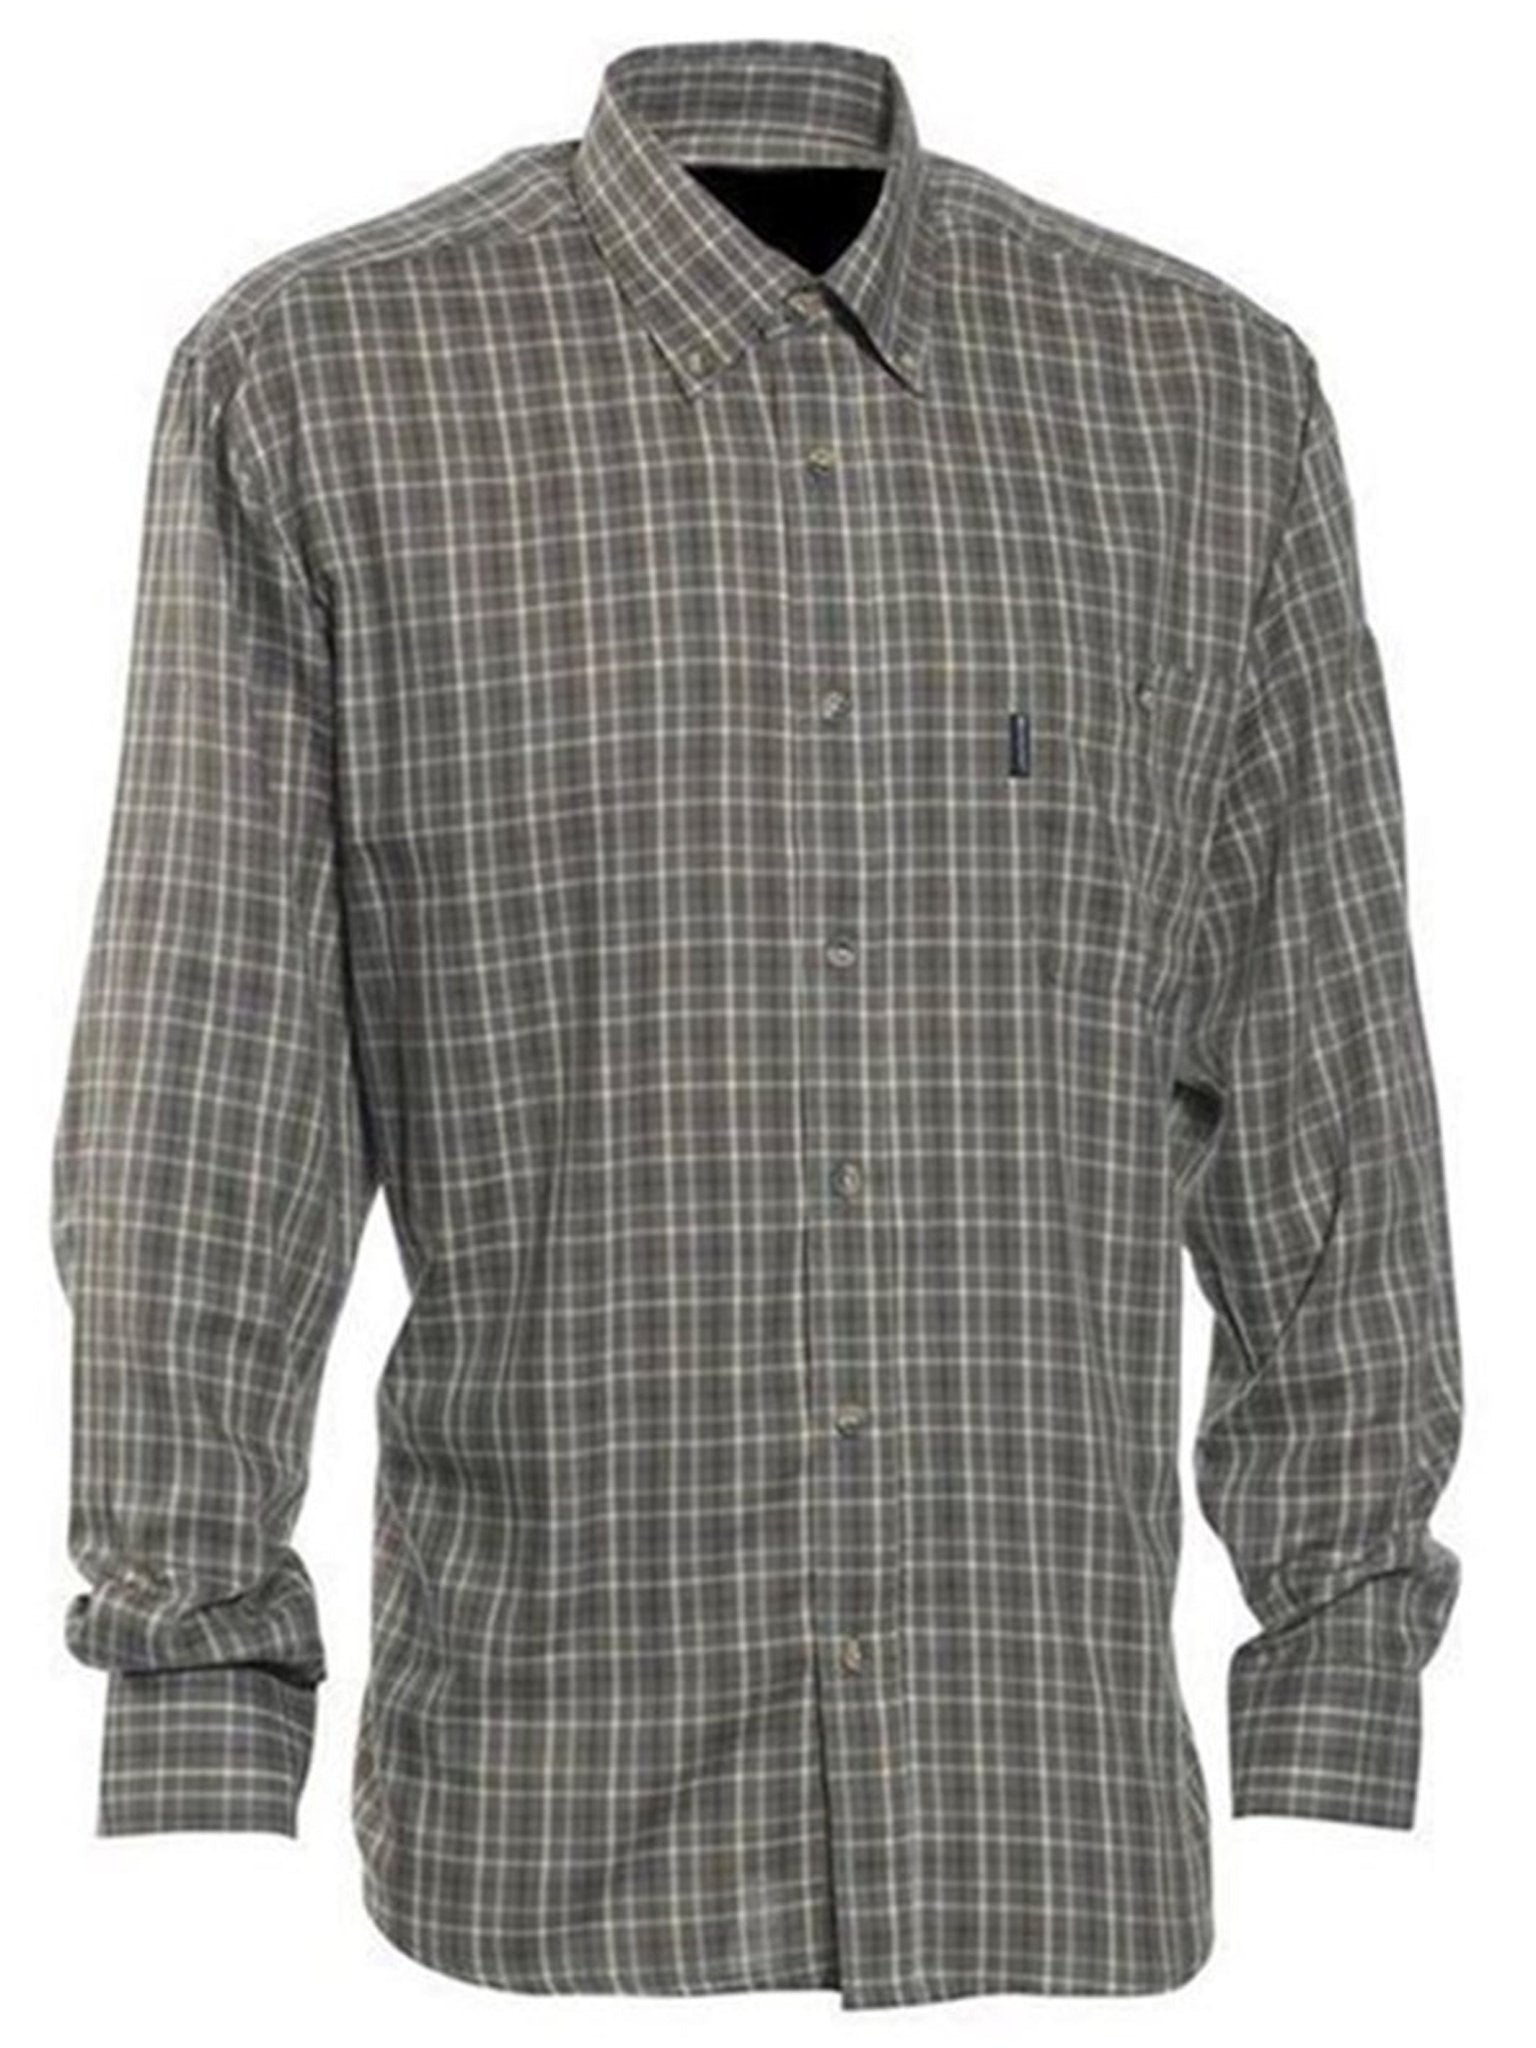 4elementsclothingDeerhunterDeerhunter - Waylon Mens Long Sleeve shirt / Mens Check Shirt / Country Mens ShirtShirt8468-499-3536